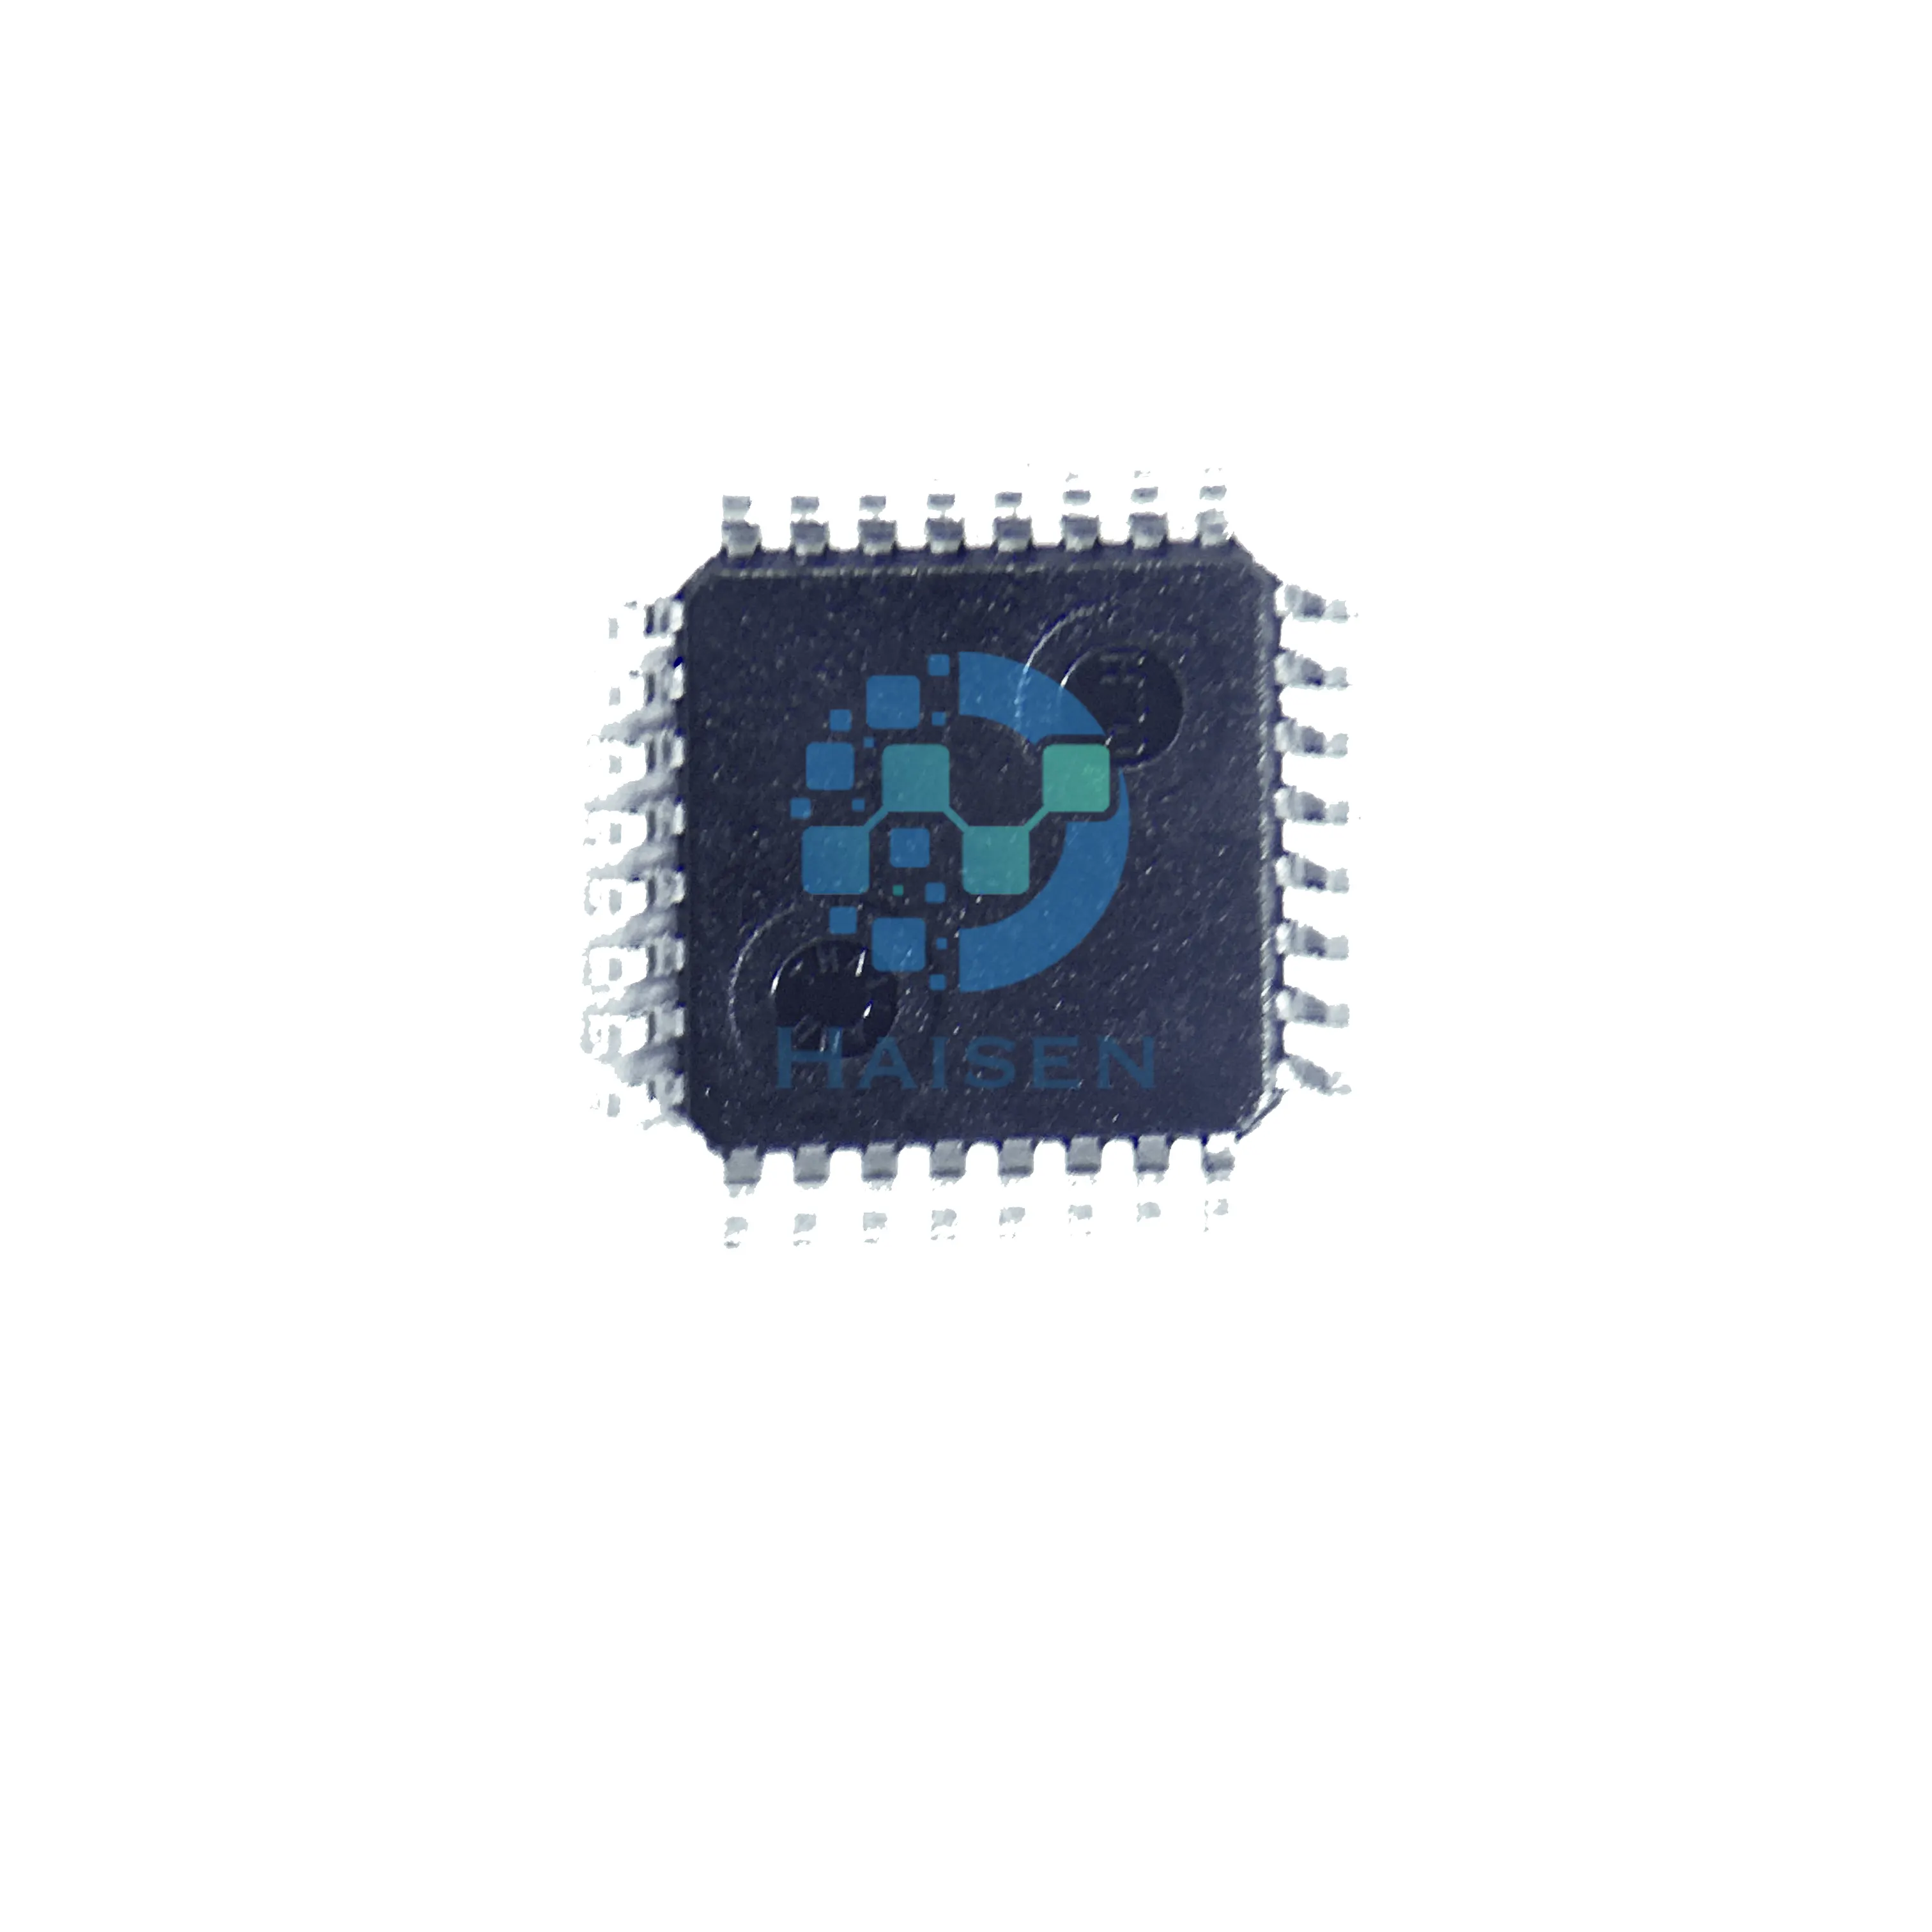 HAISEN ATMEGA8A-AU ATMEGA8A 32-TQFP Mikro controller mcu Flash neue und originale elektronische Komponenten IC-Chip integrierte Schaltung